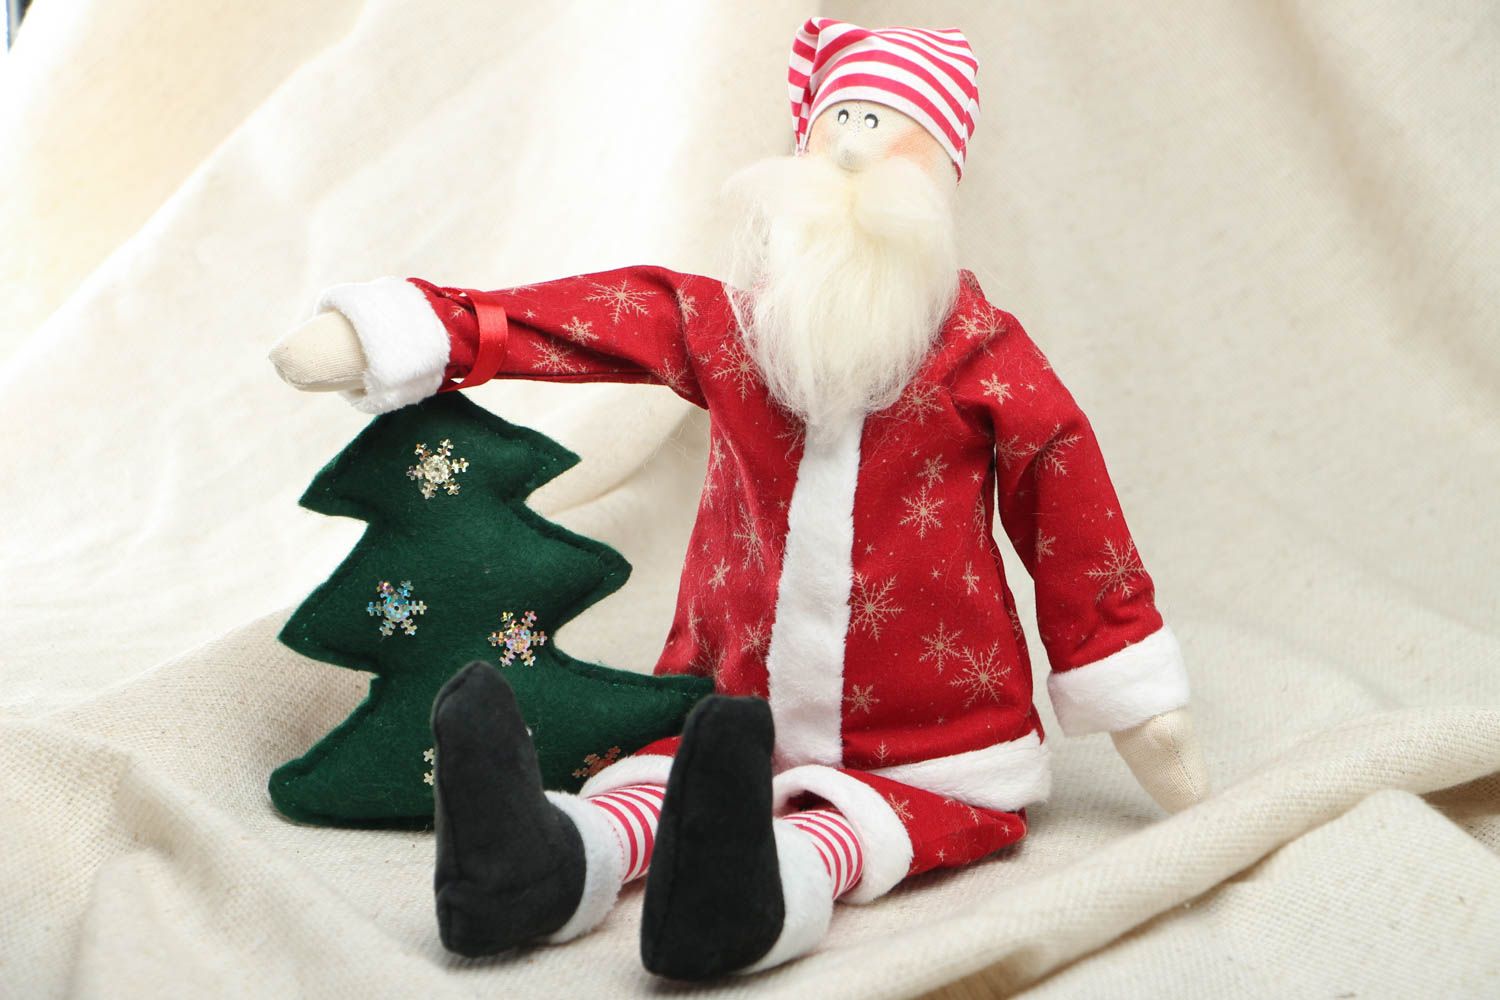 De brinquedo macio em forma de Papai Noel com árvore de Natal foto 1